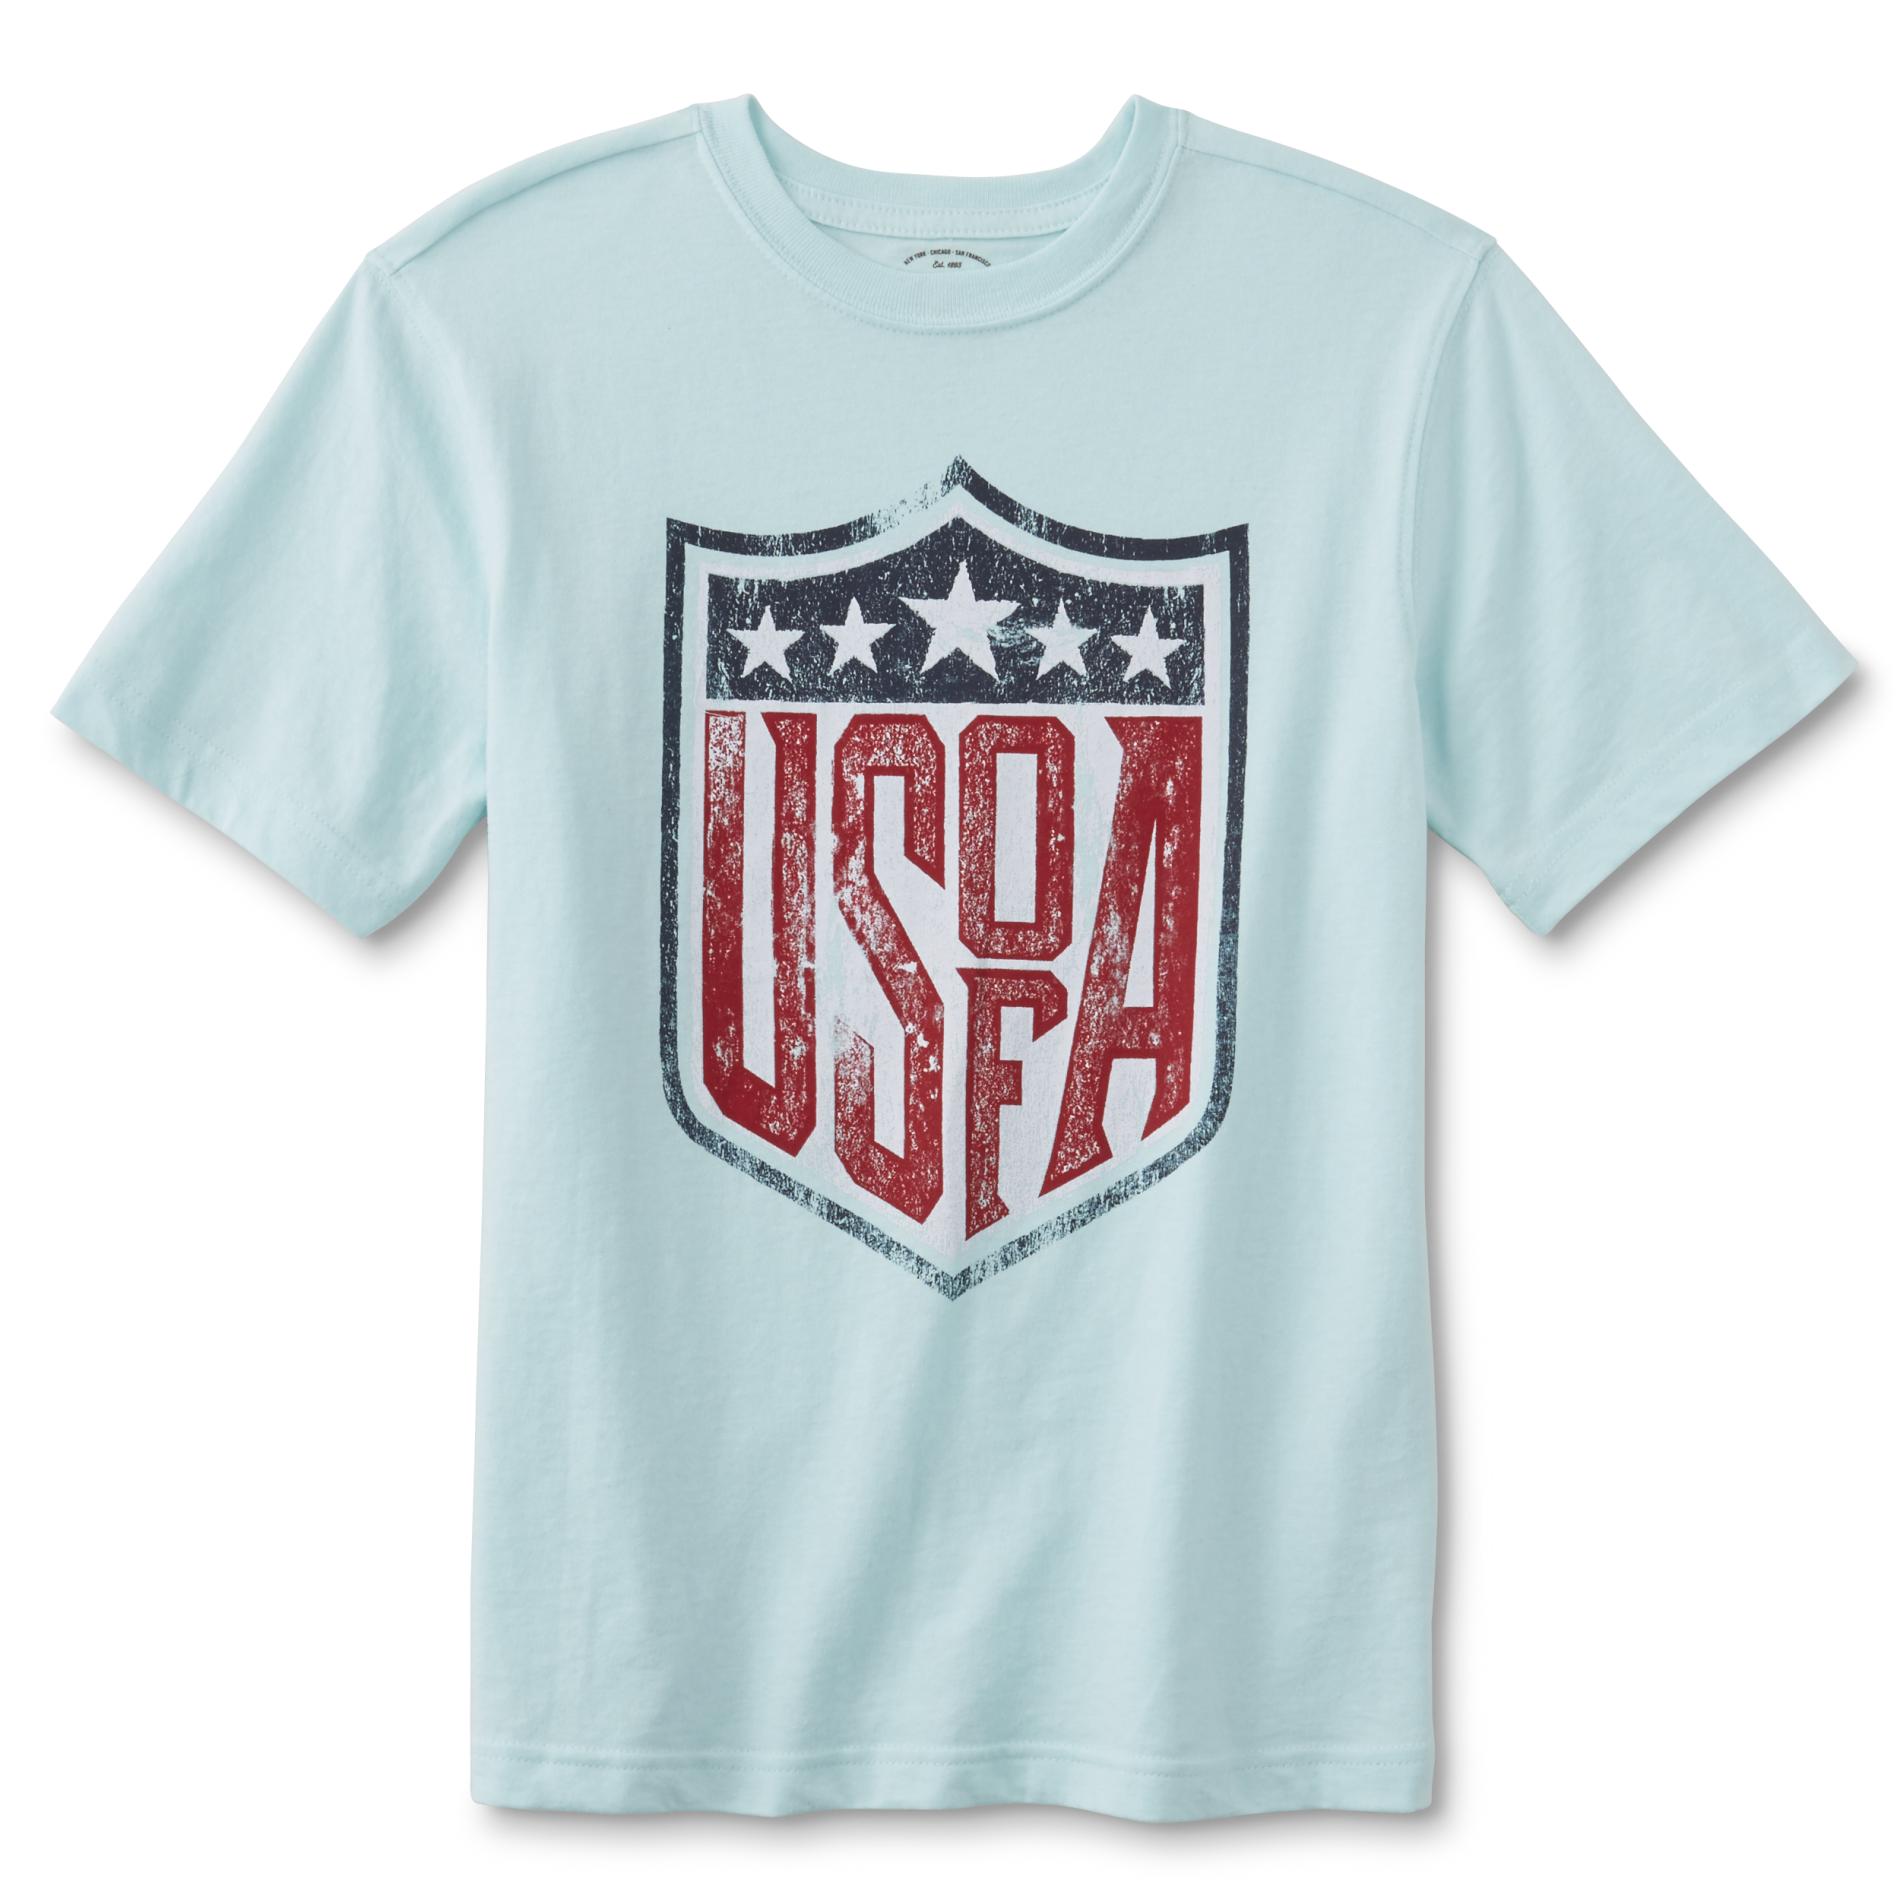 Roebuck & Co. Boys' Graphic T-Shirt - USA